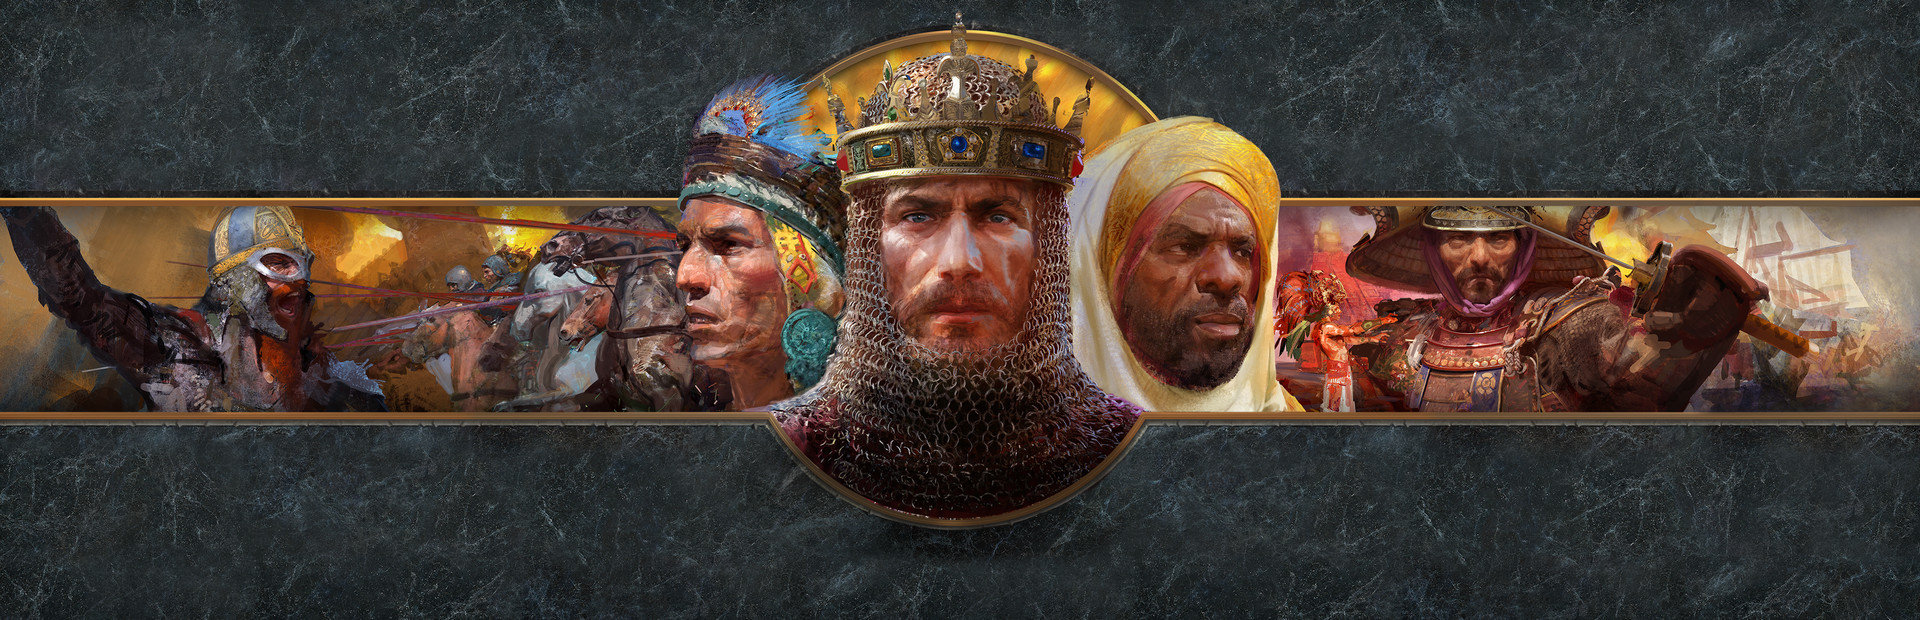 Age of Empires II Definitive Edition: the last Khans. Europa Universalis 4. Europa Universalis 4 фон. Империя первый шаг полностью